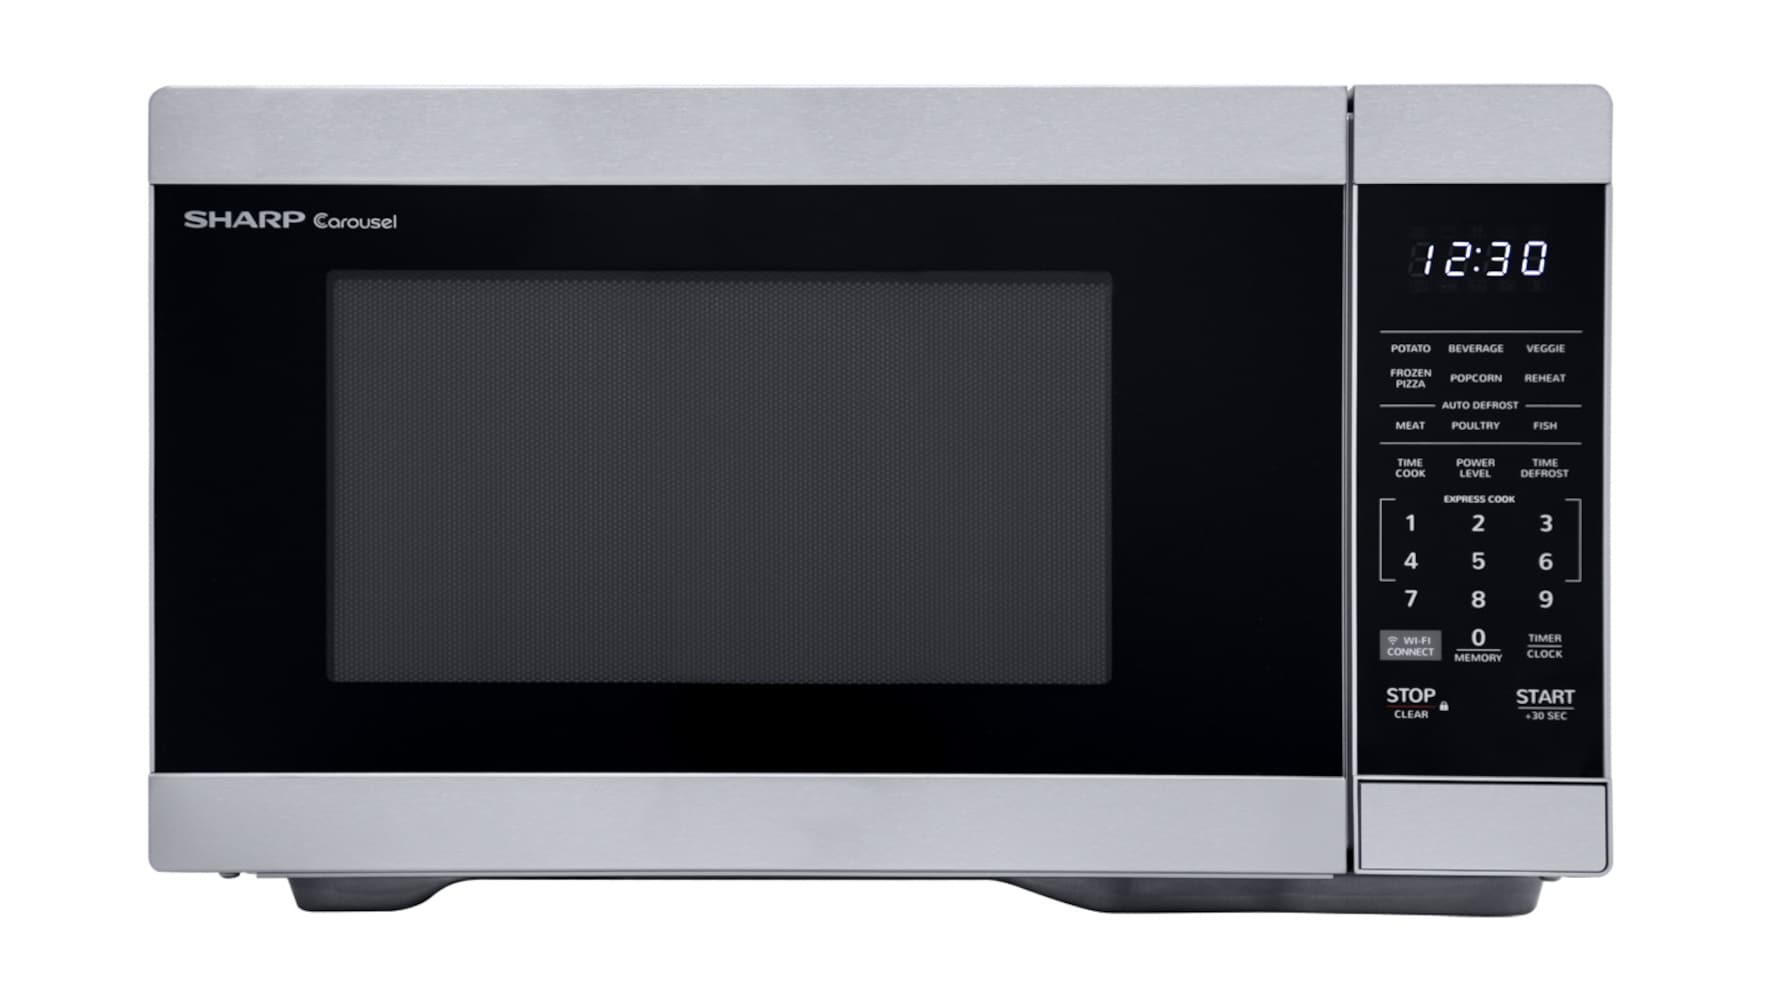 Avanti 1.1 cu. ft. Stainless Steel Microwave Oven, 1,000 W, Mirror